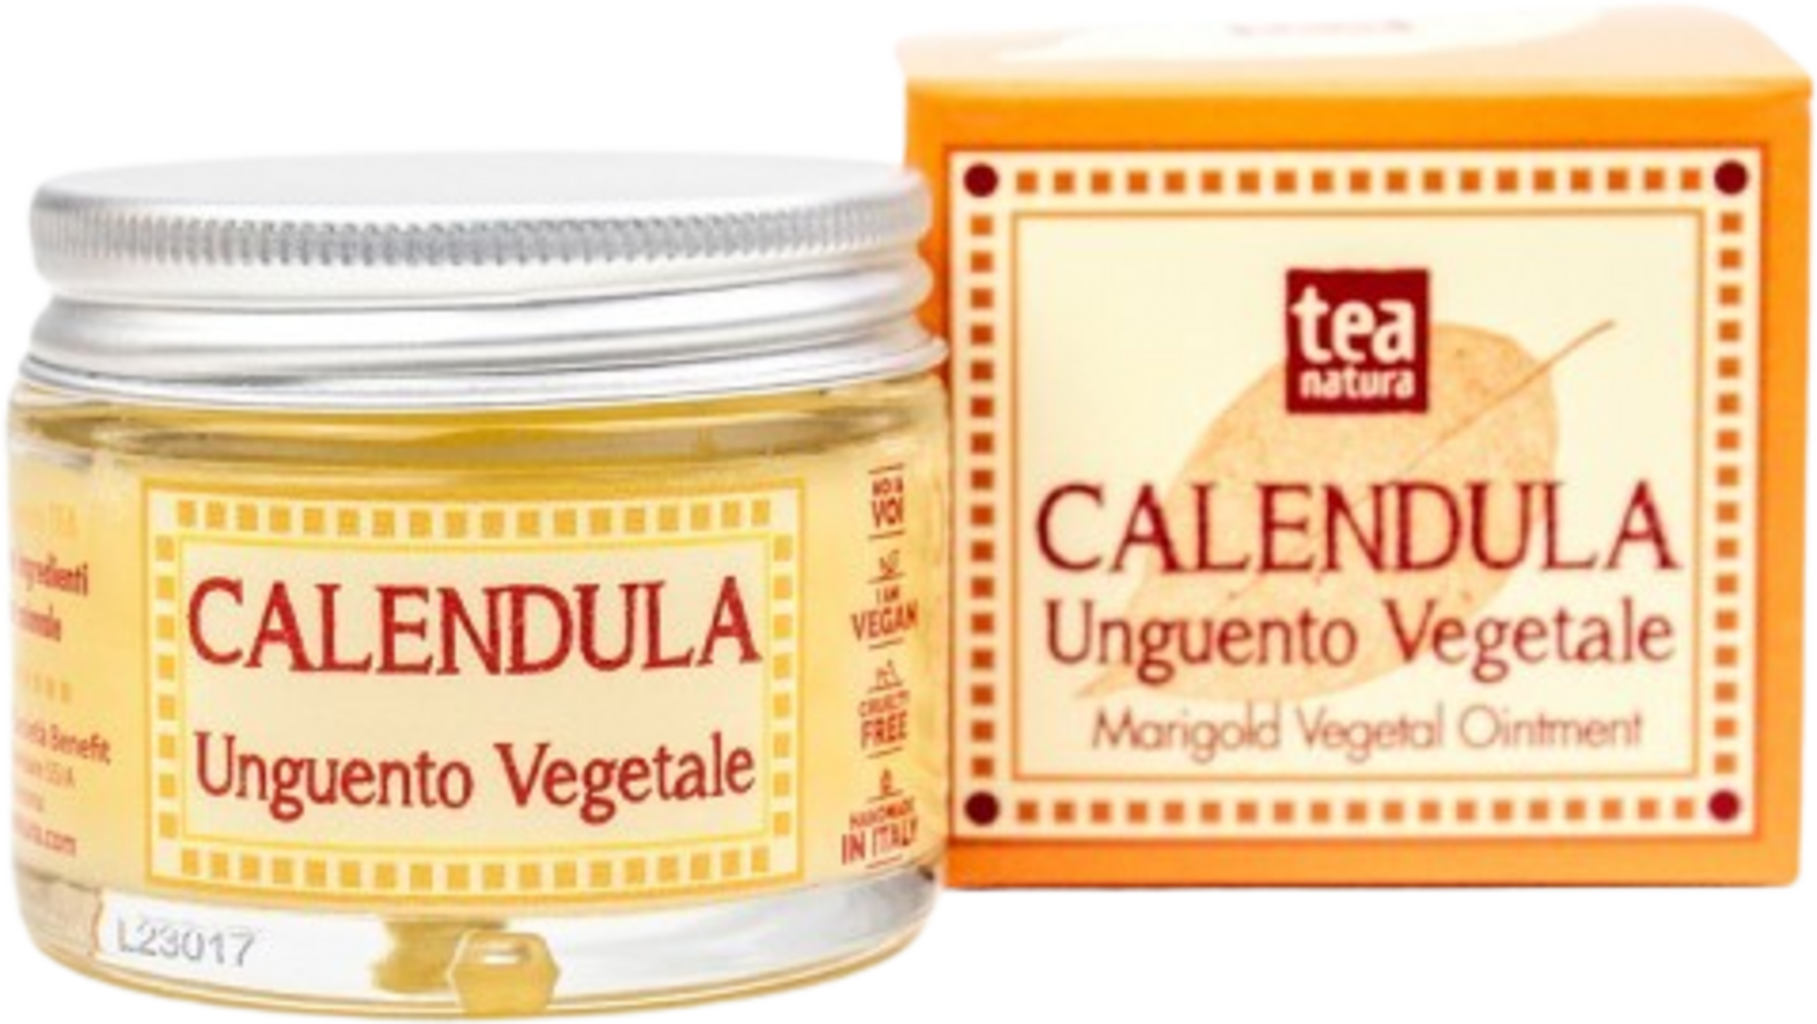 TEA Natura Unguento Vegetale alla Calendula - 50 ml